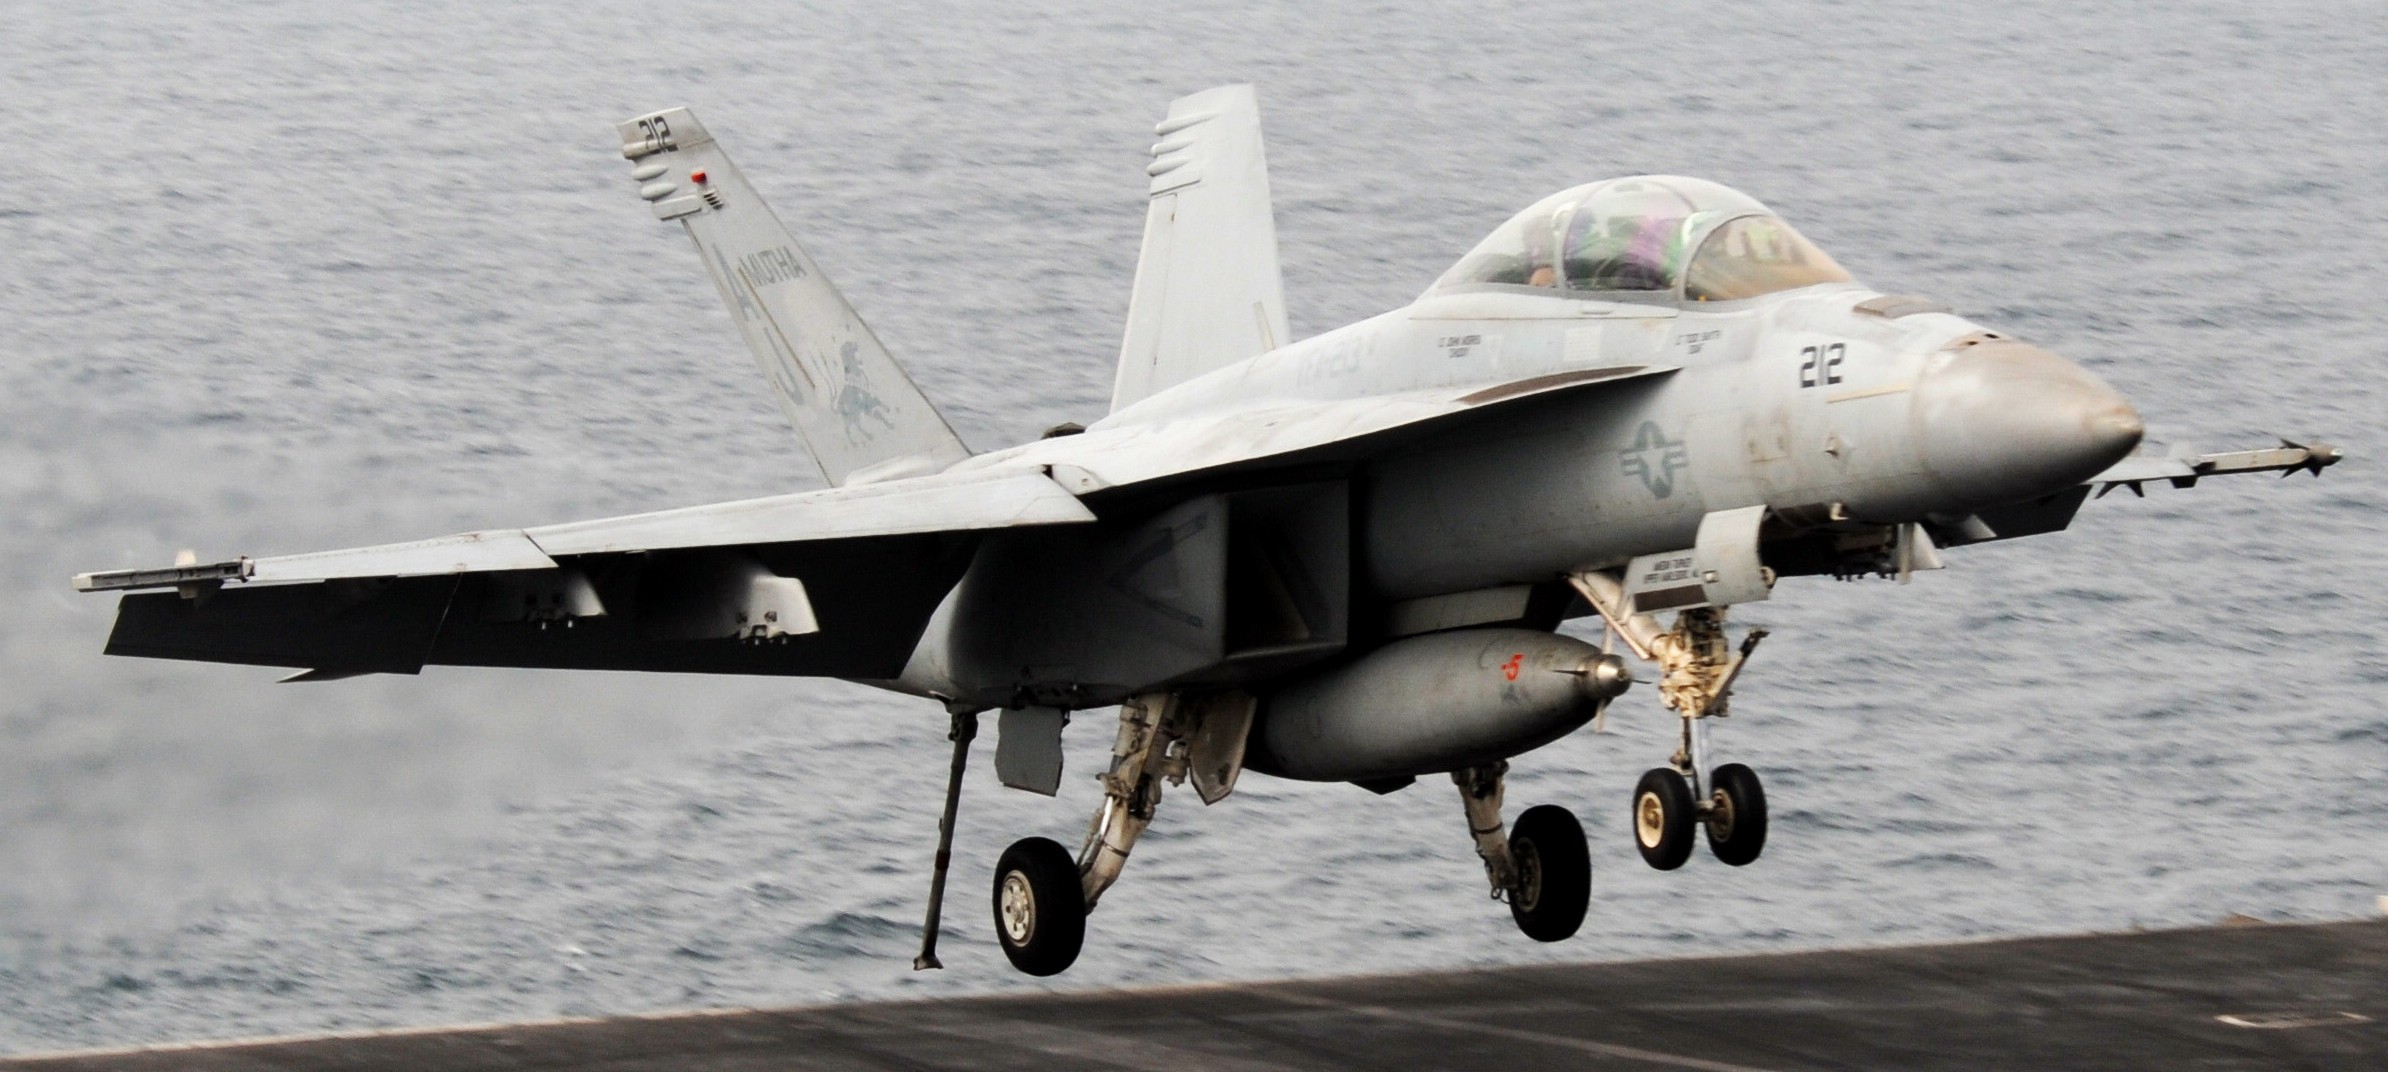 vfa-213 black lions strike fighter squadron us navy f/a-18f super hornet cvw-8 uss george h. w. bush cvn-77 73